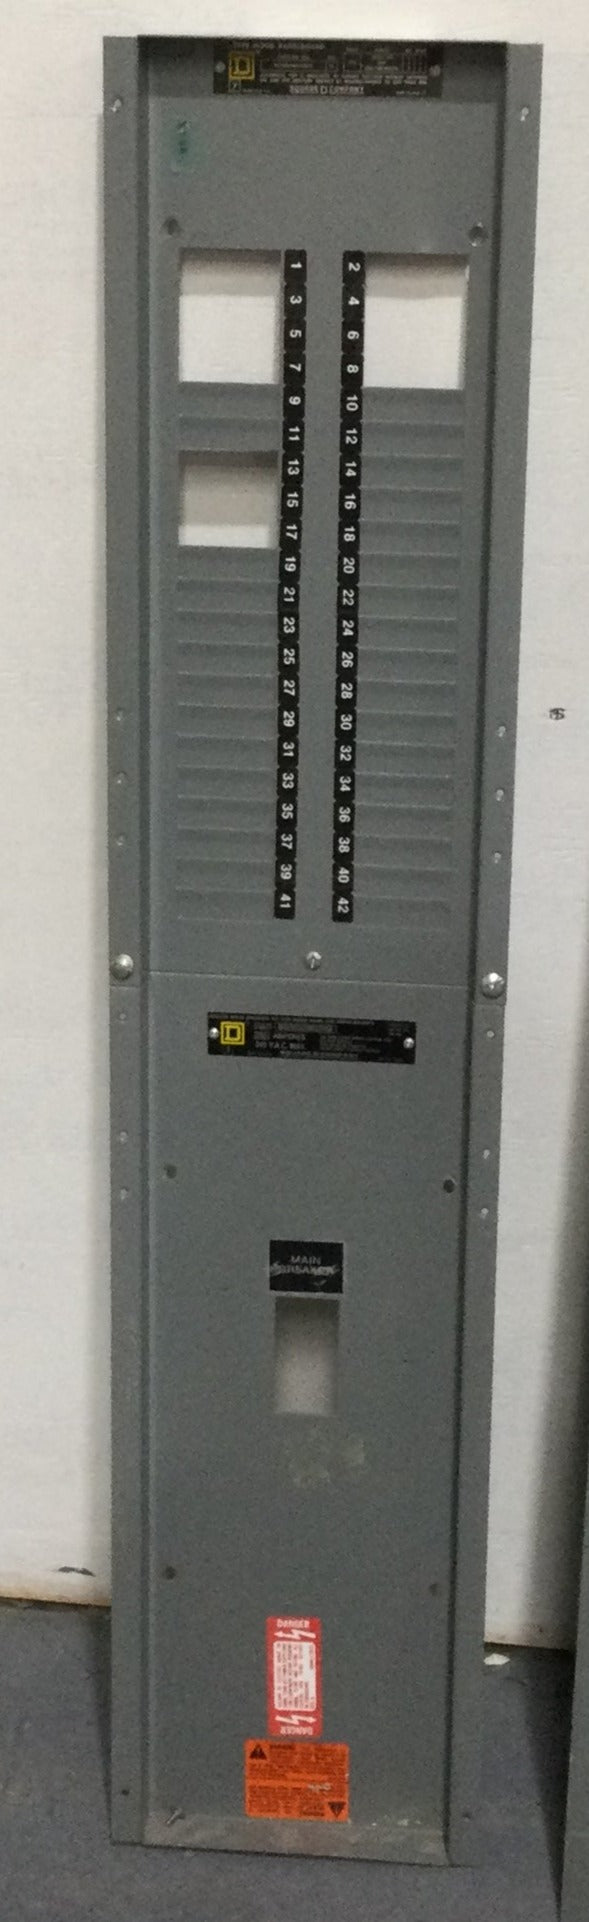 Square D NQOD442L225CU 225 Amp 240 Volt 3 Ph/4 Wire Type NQOD Panelboard